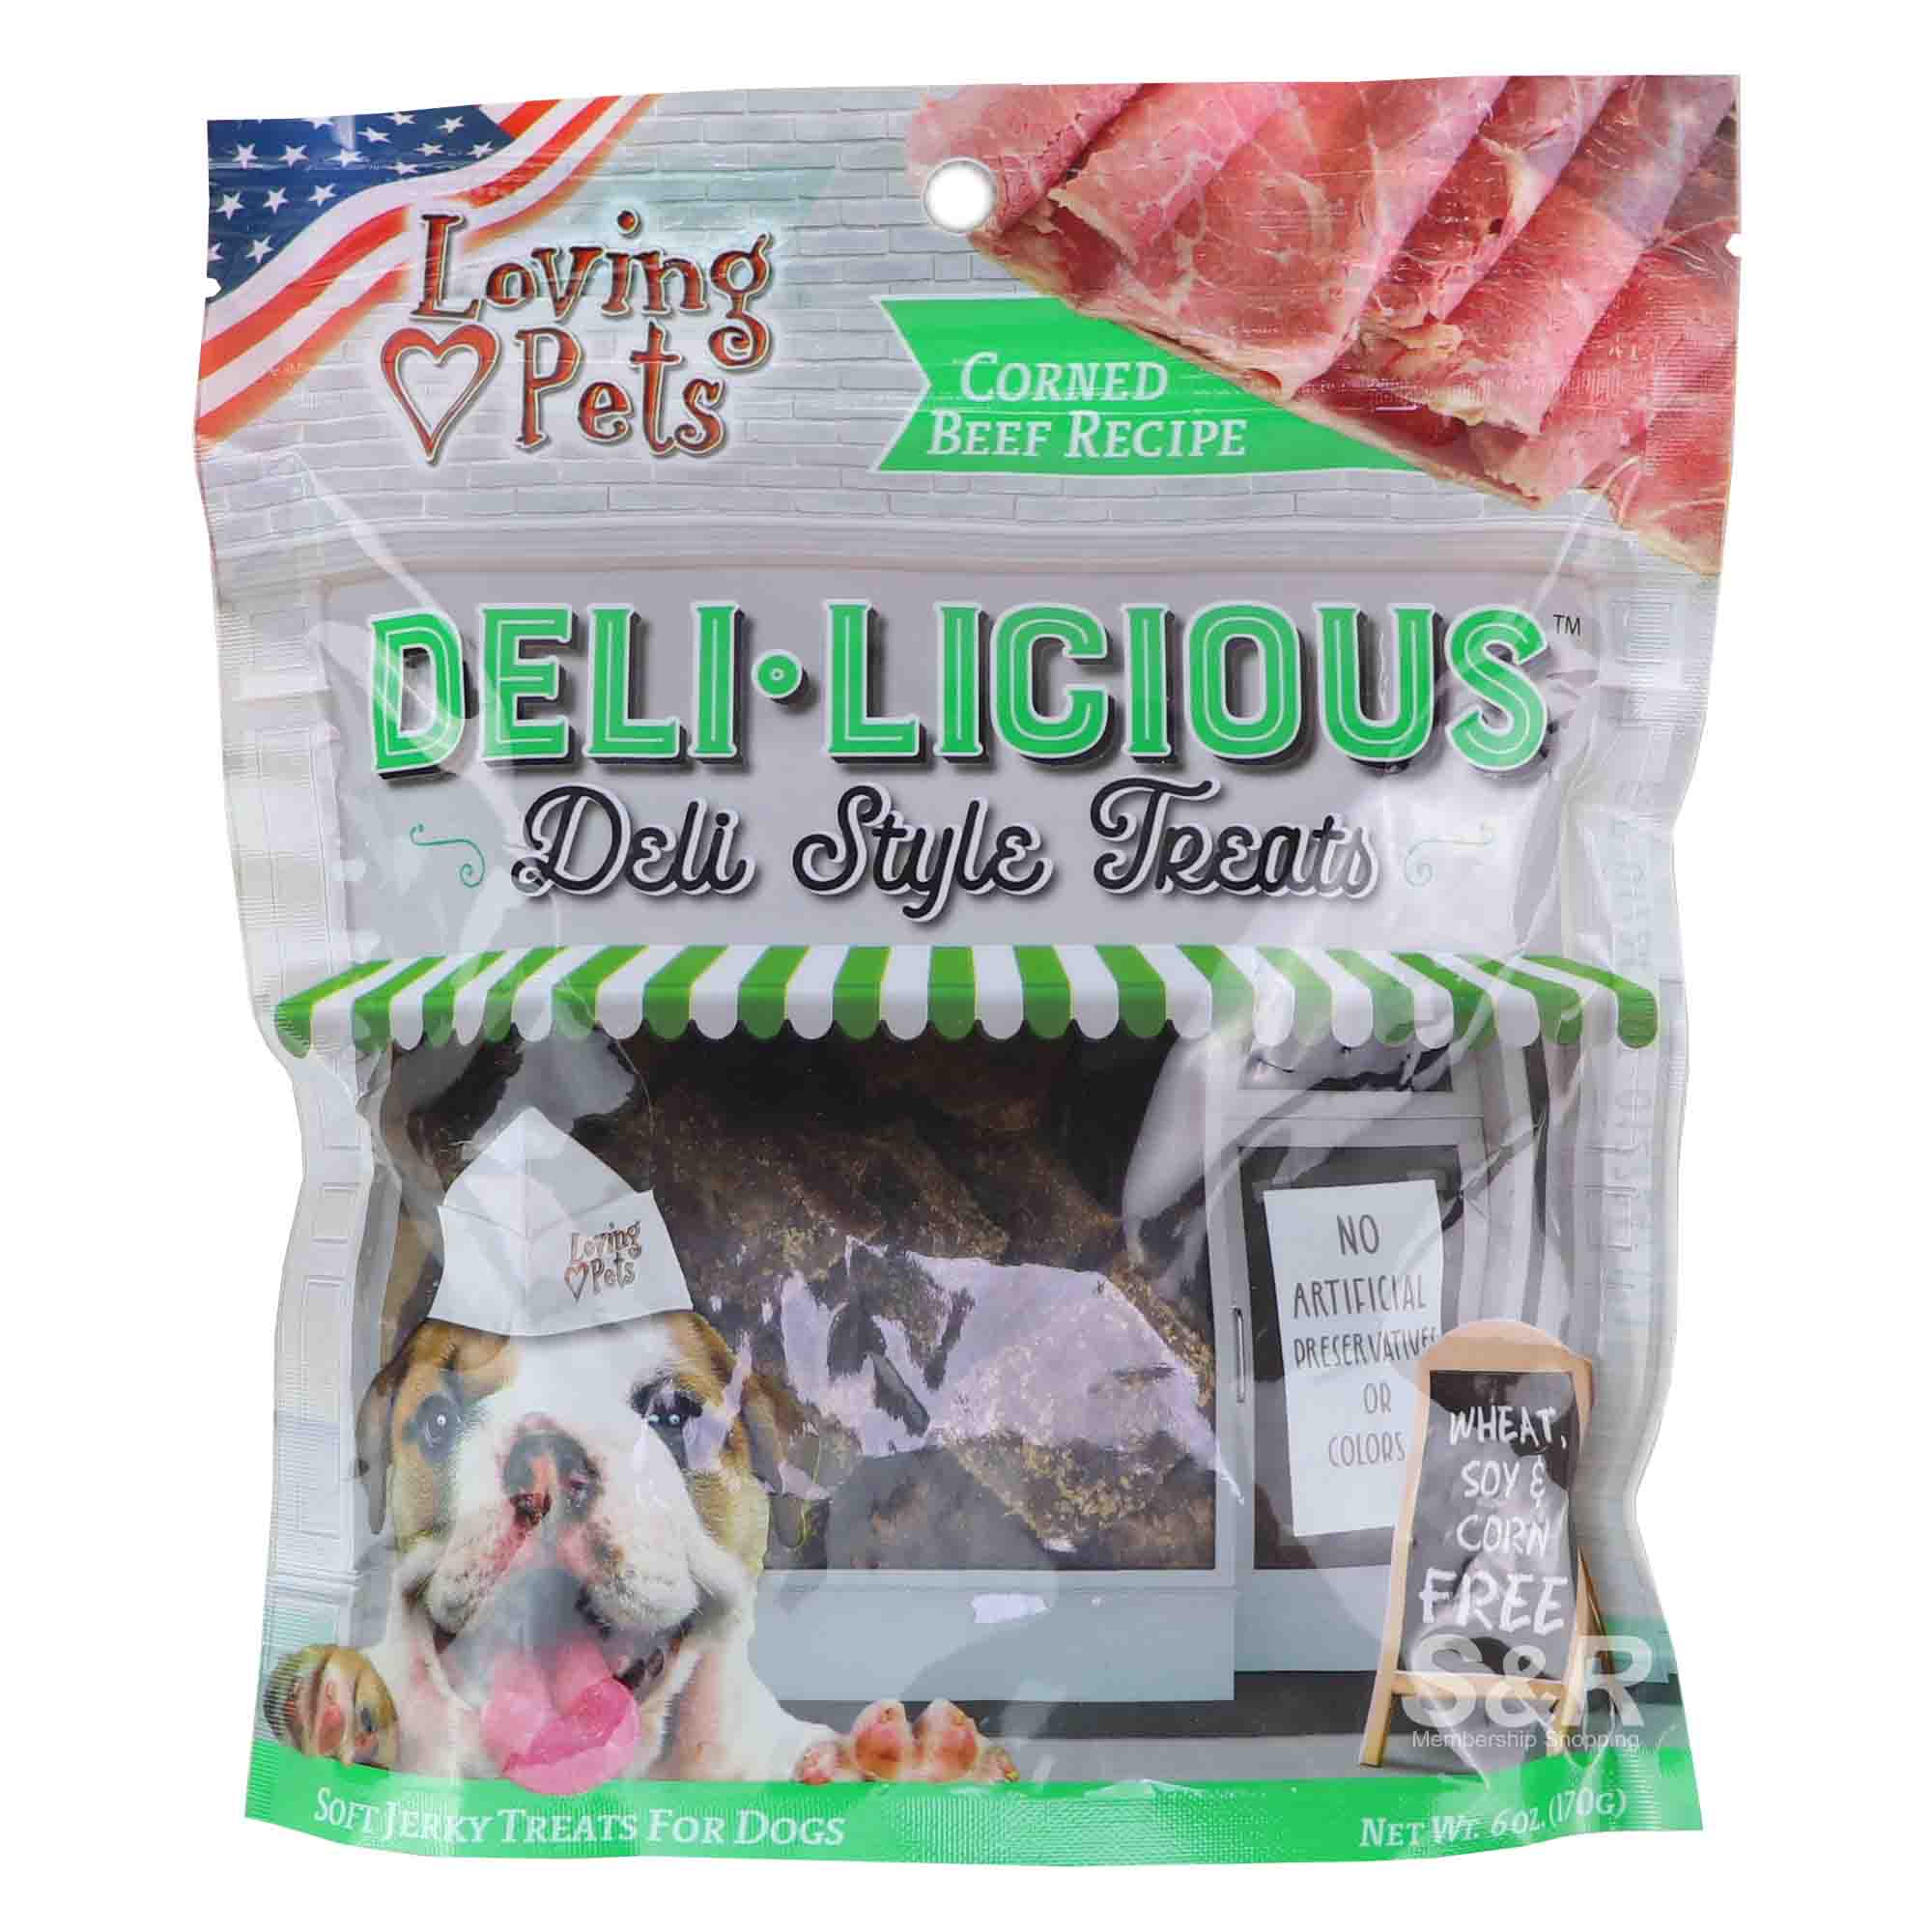 Loving Pets Deli-Licious Corned Beef Dog Treats 170g